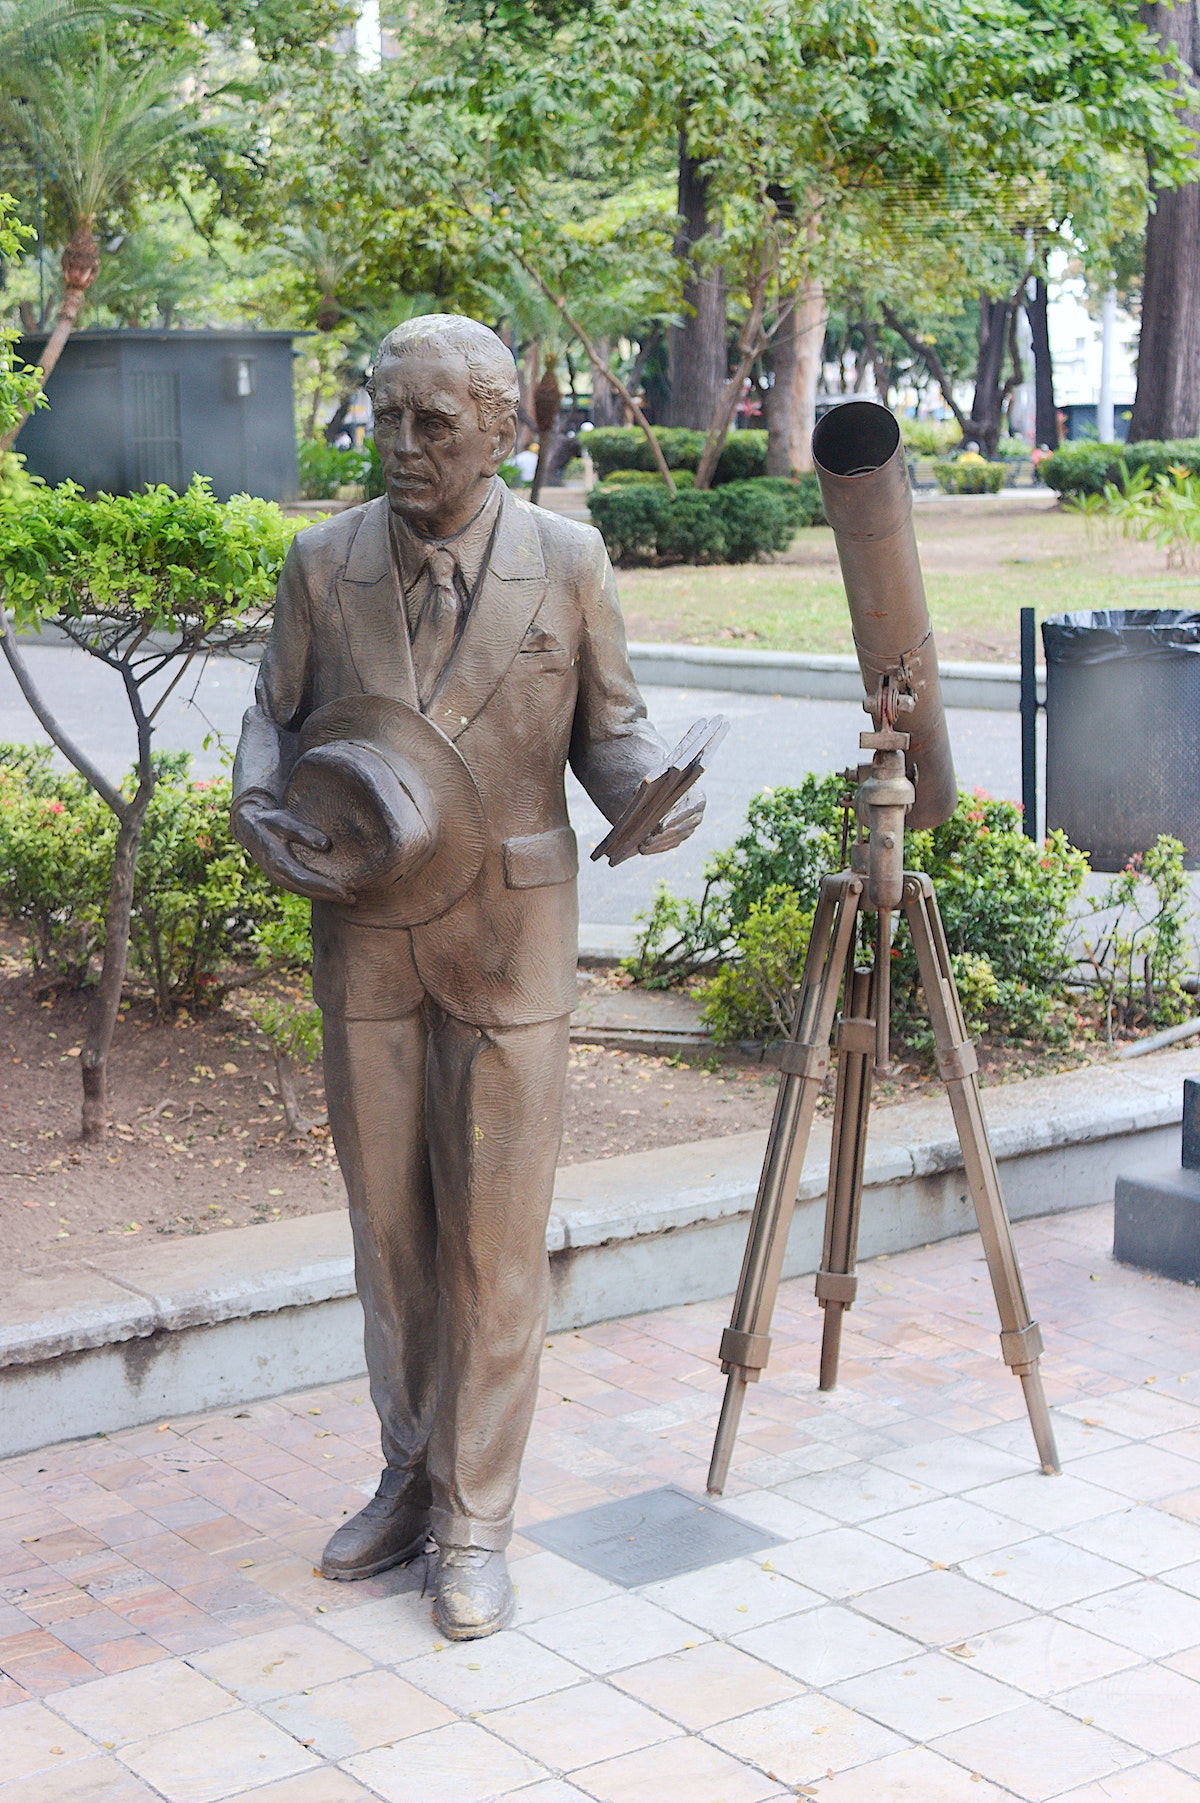 Statue of Ecuadorian astronomer Eloy Ortega

